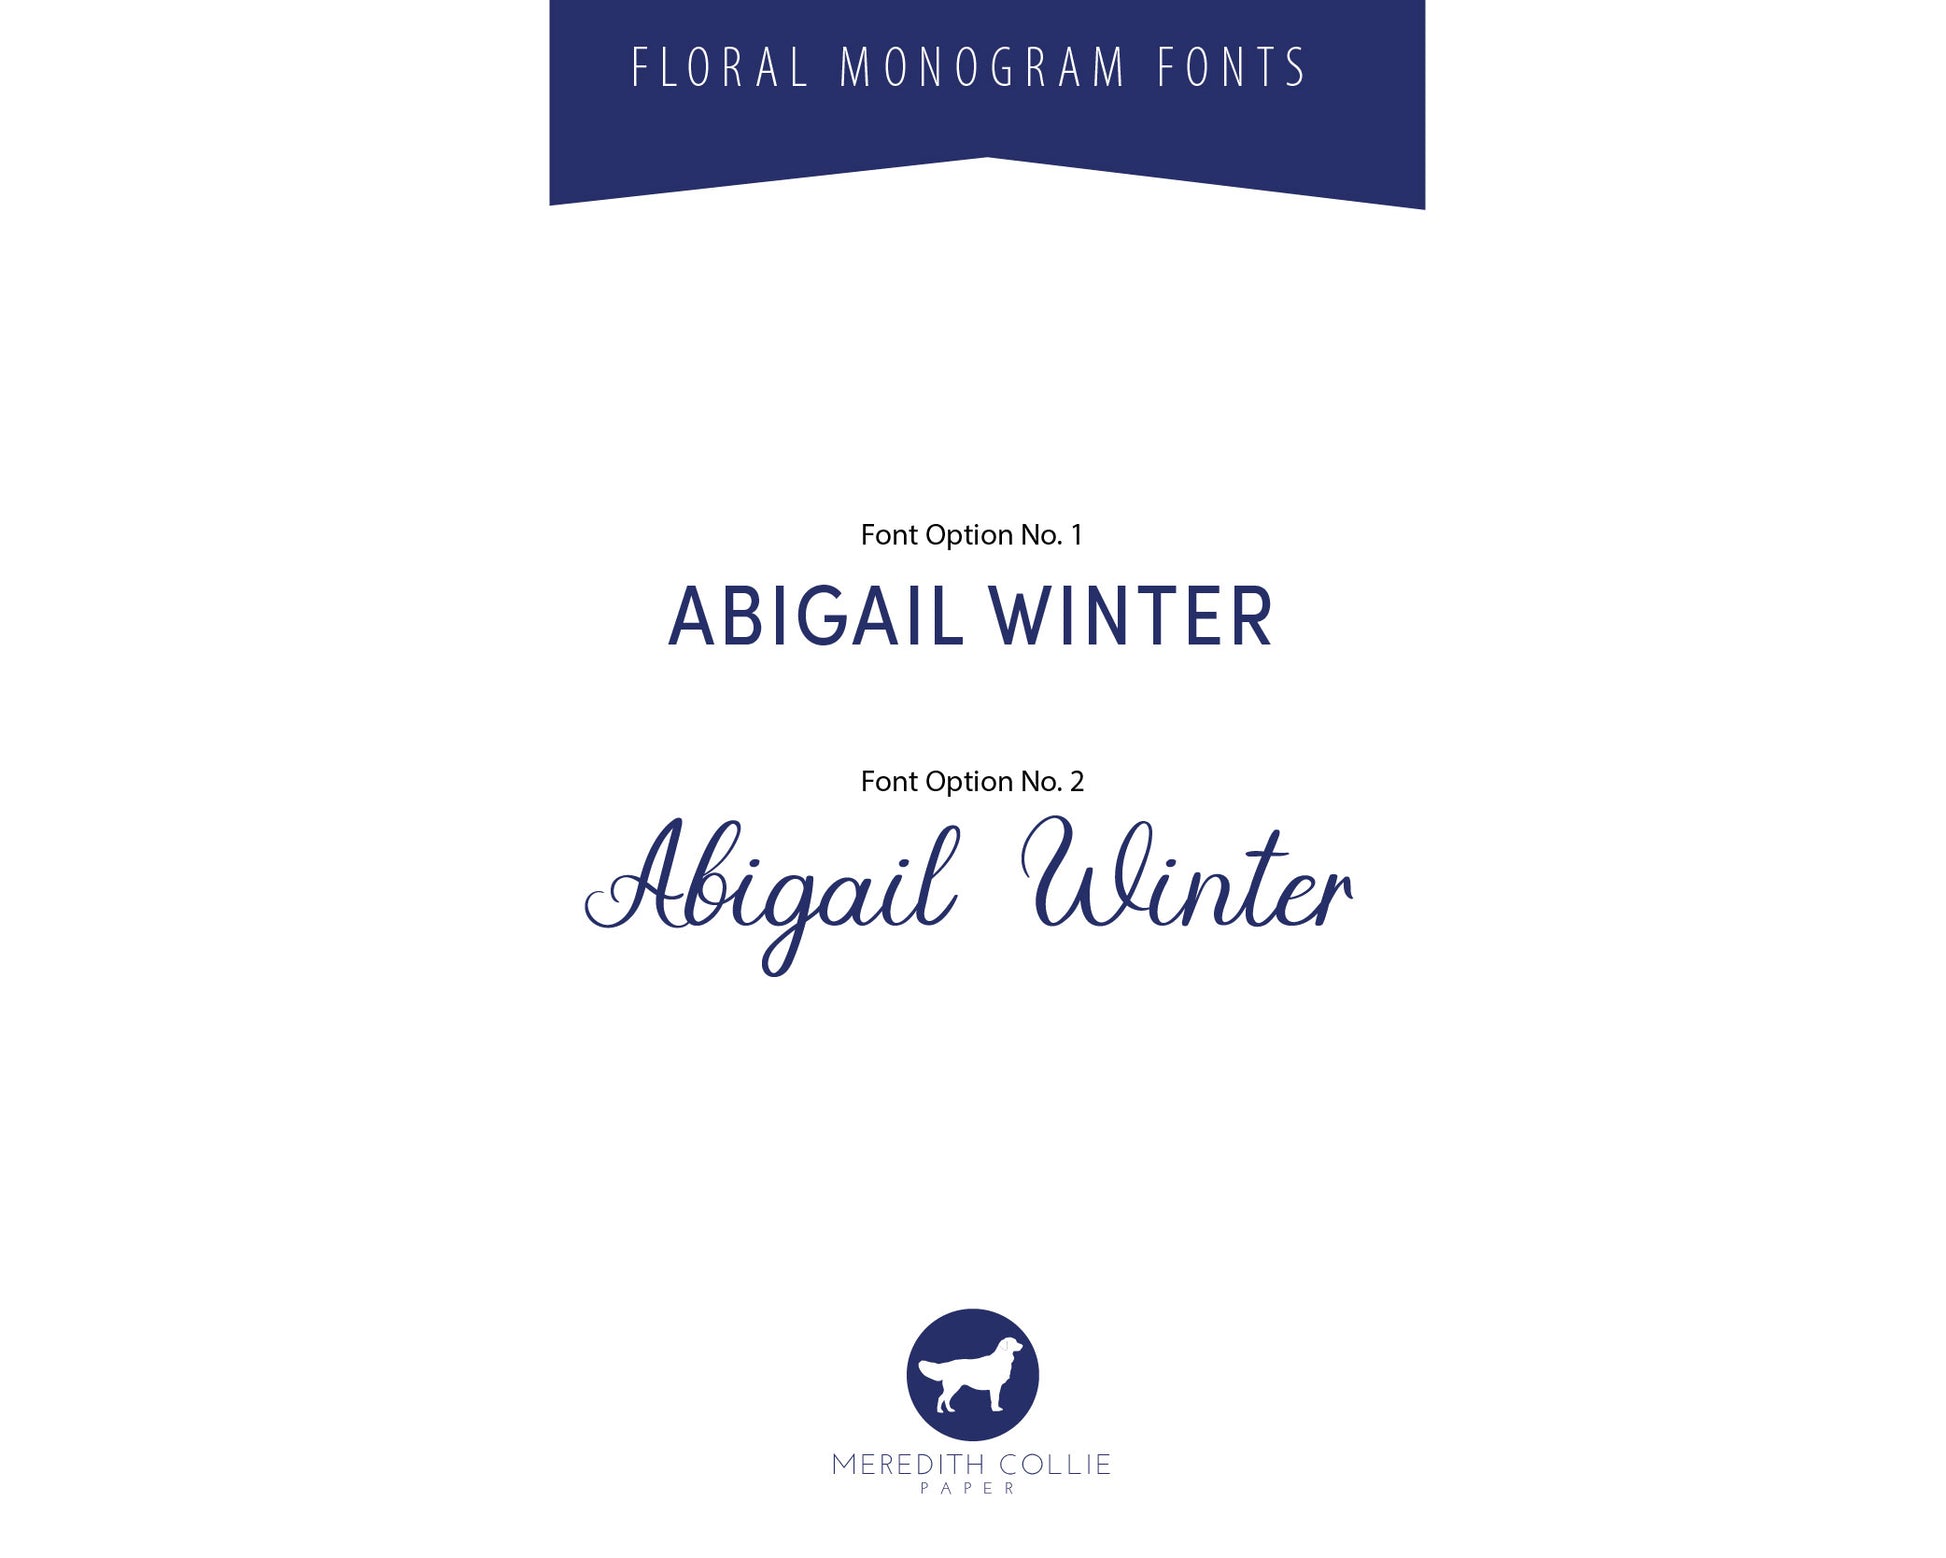 Floral Monogram Font Options / Meredith Collie Paper